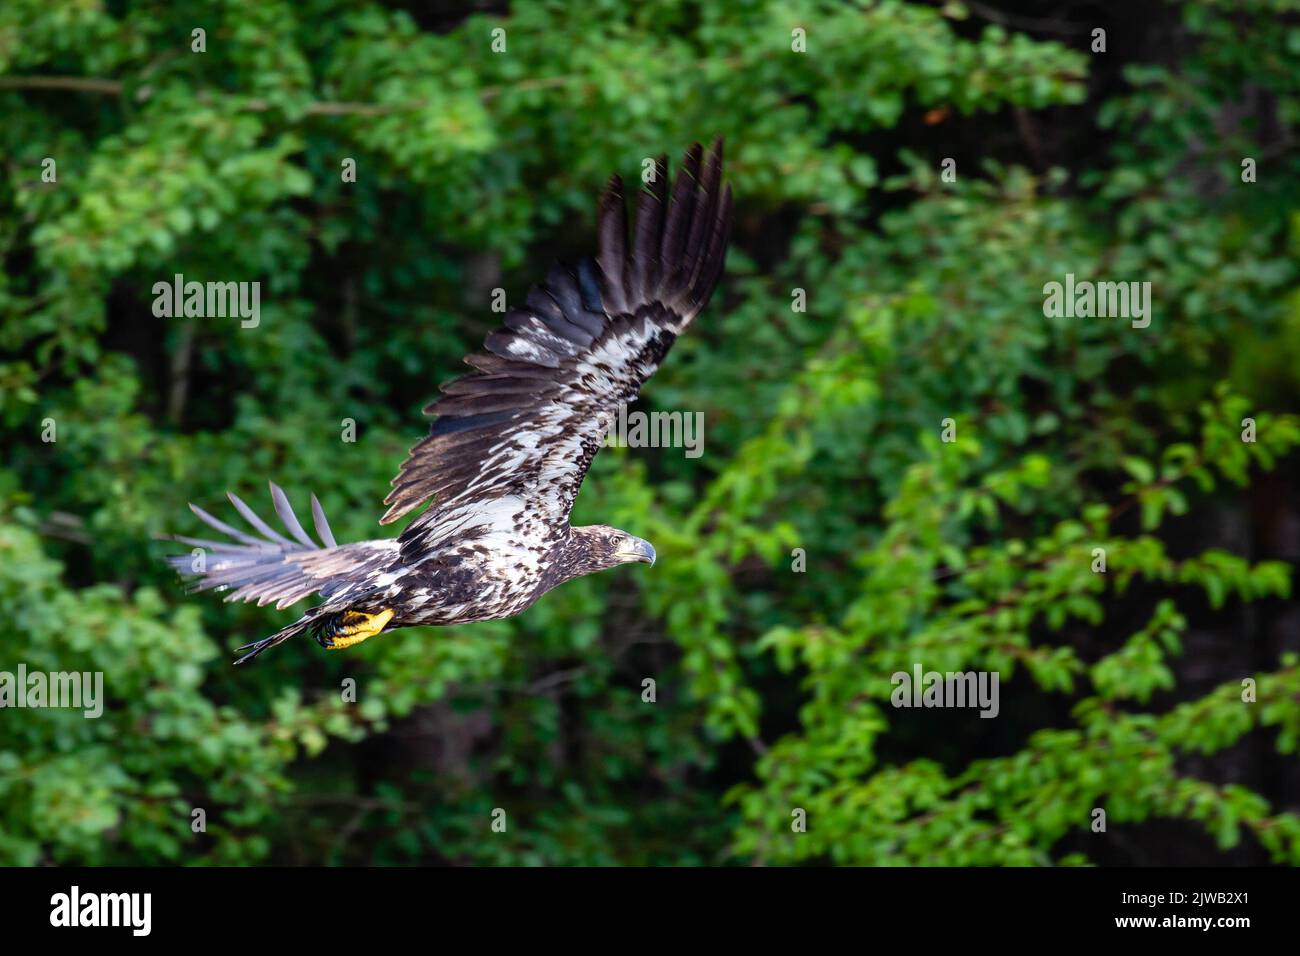 Juvenile bald eagle (Haliaeetus leucocephalus) flying in front of trees, horizontal Stock Photo